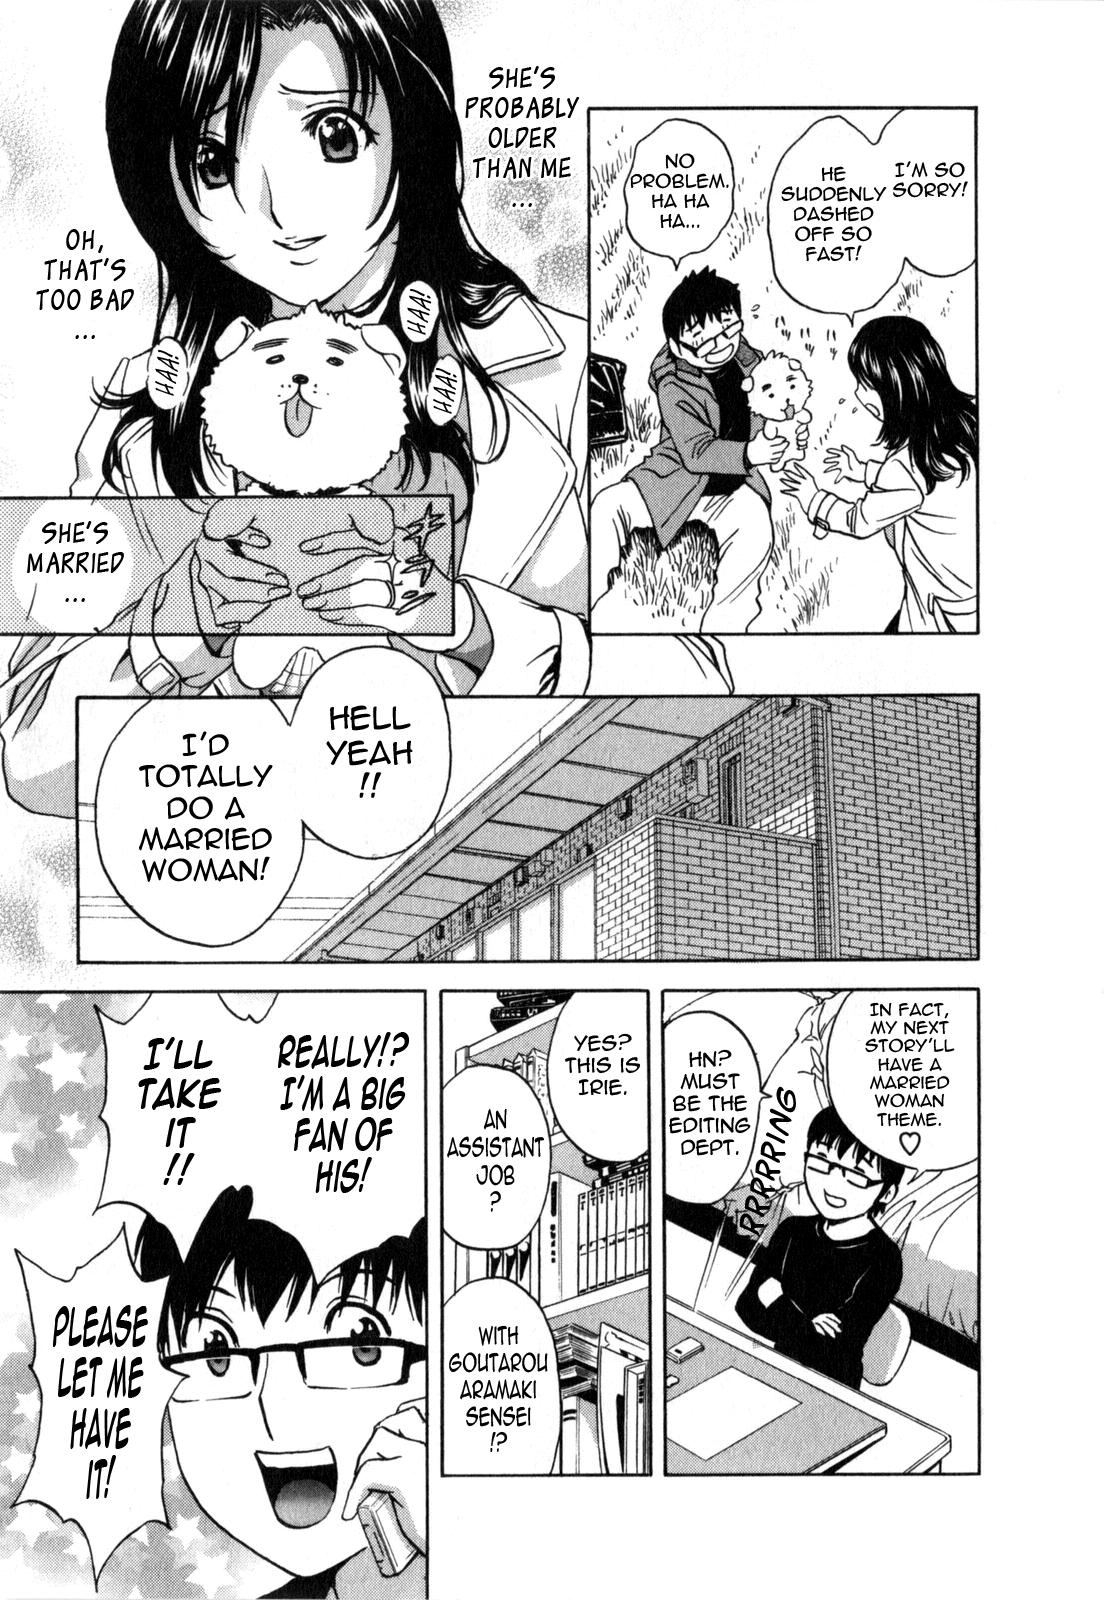 [Hidemaru] Life with Married Women Just Like a Manga 1 - Ch. 1-8 [English] {Tadanohito} 11